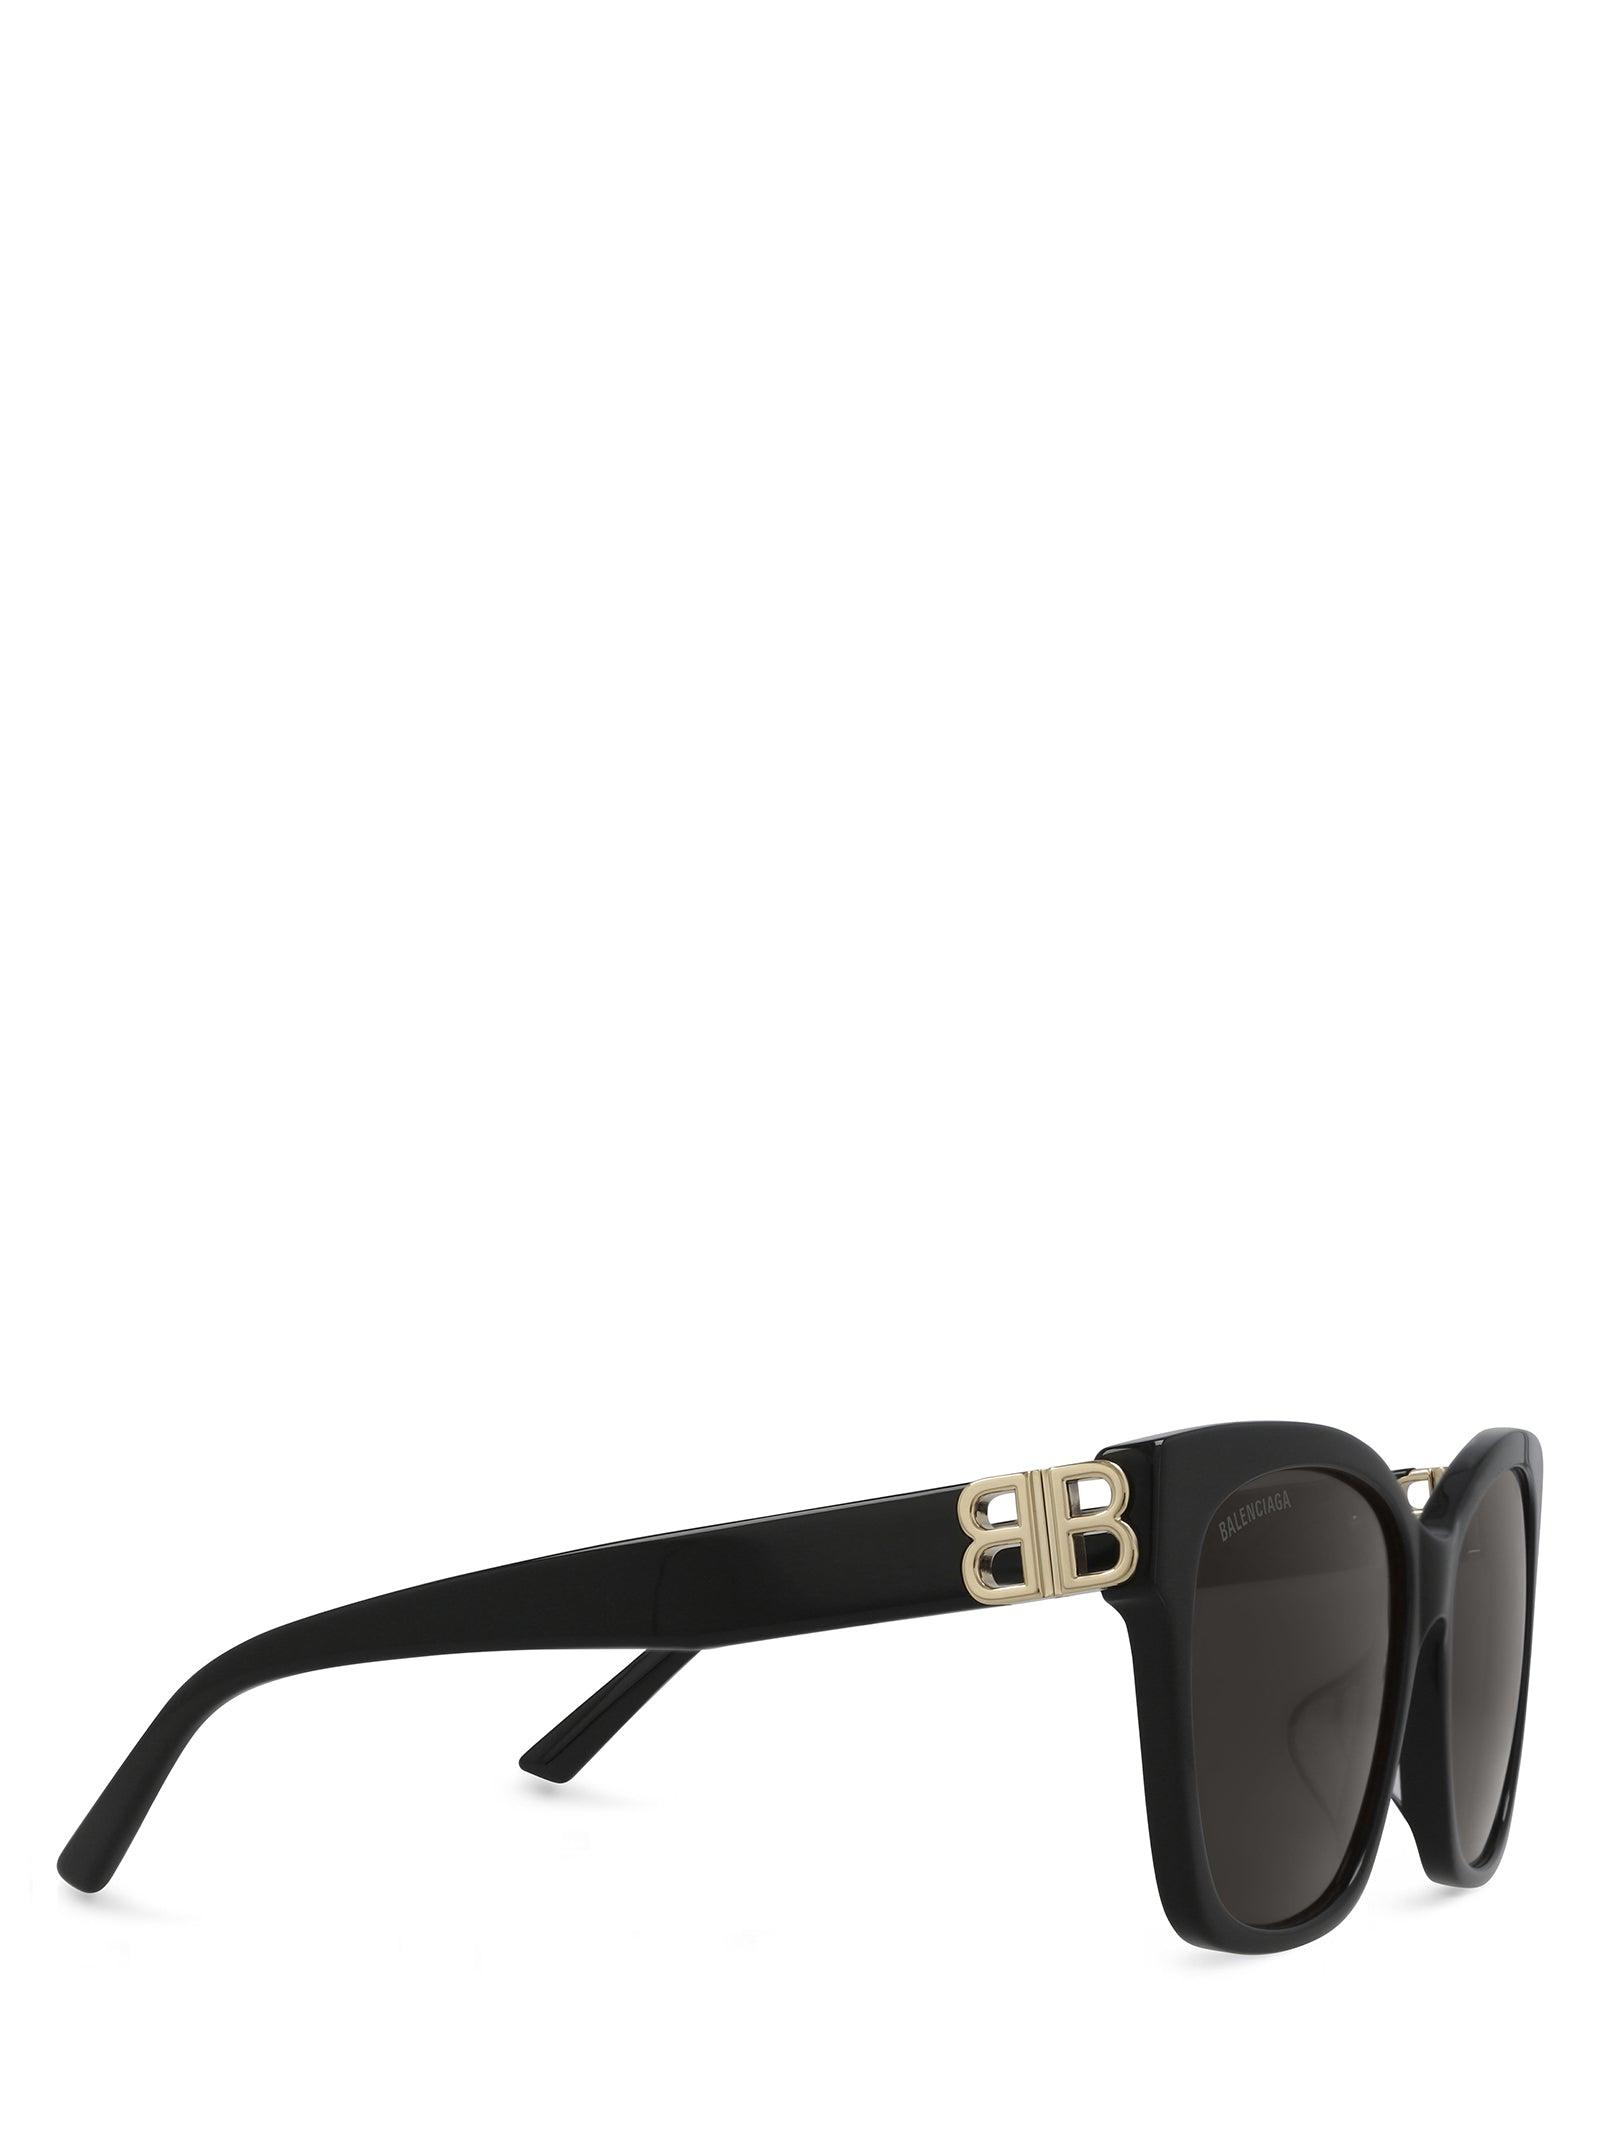 Balenciaga Sunglasses in Black | Lyst